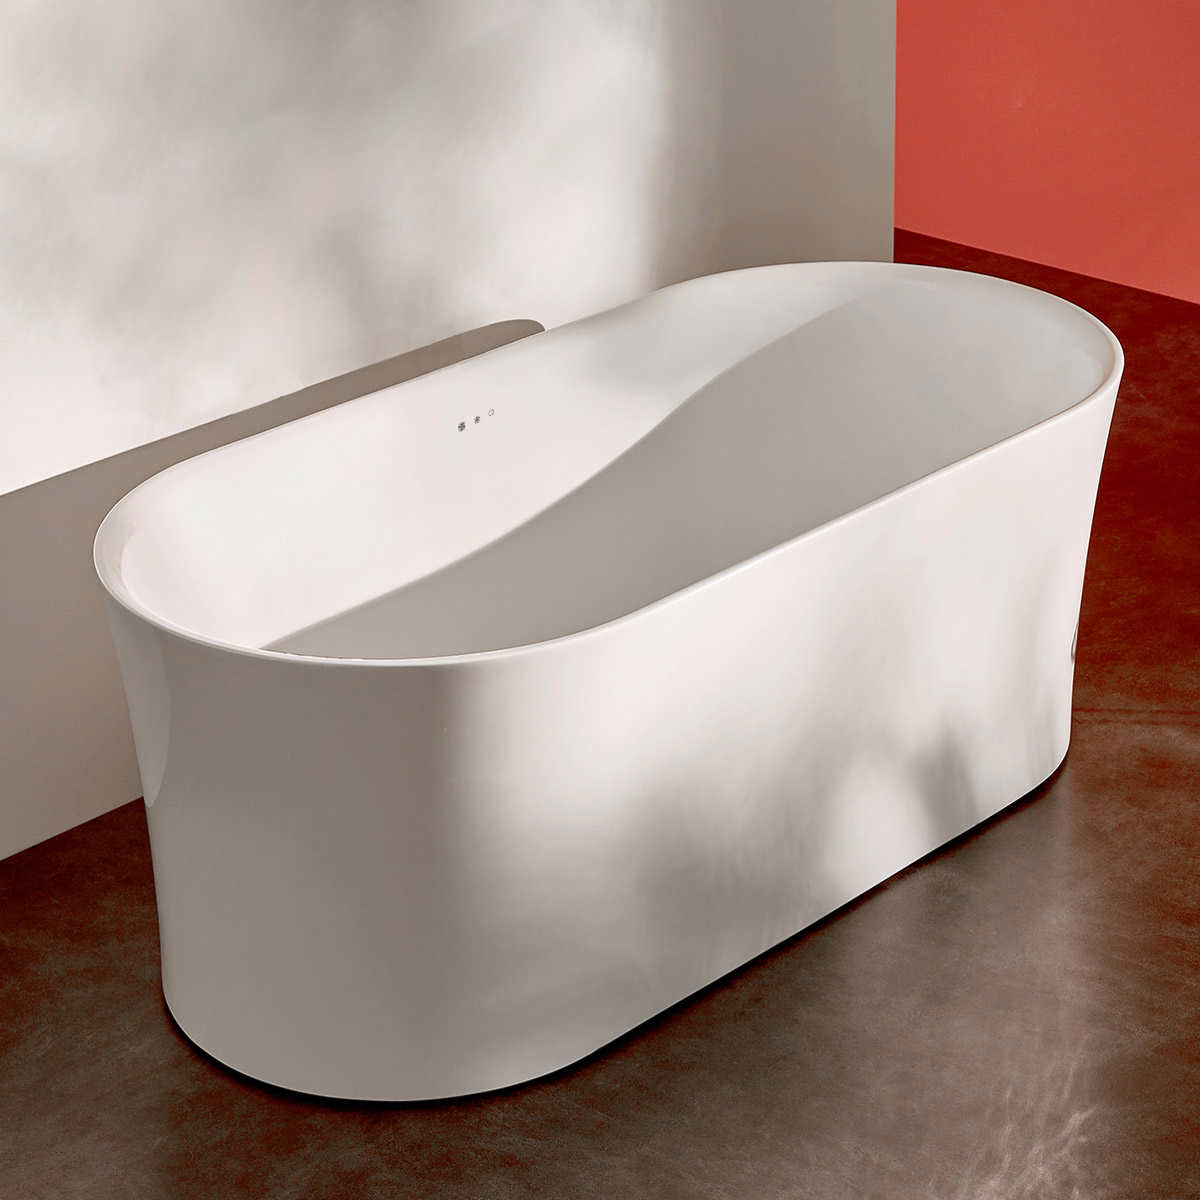 Air Jetted Freestanding Acrylic Bathtub, Acrylic Freestanding Bathtub Reviews